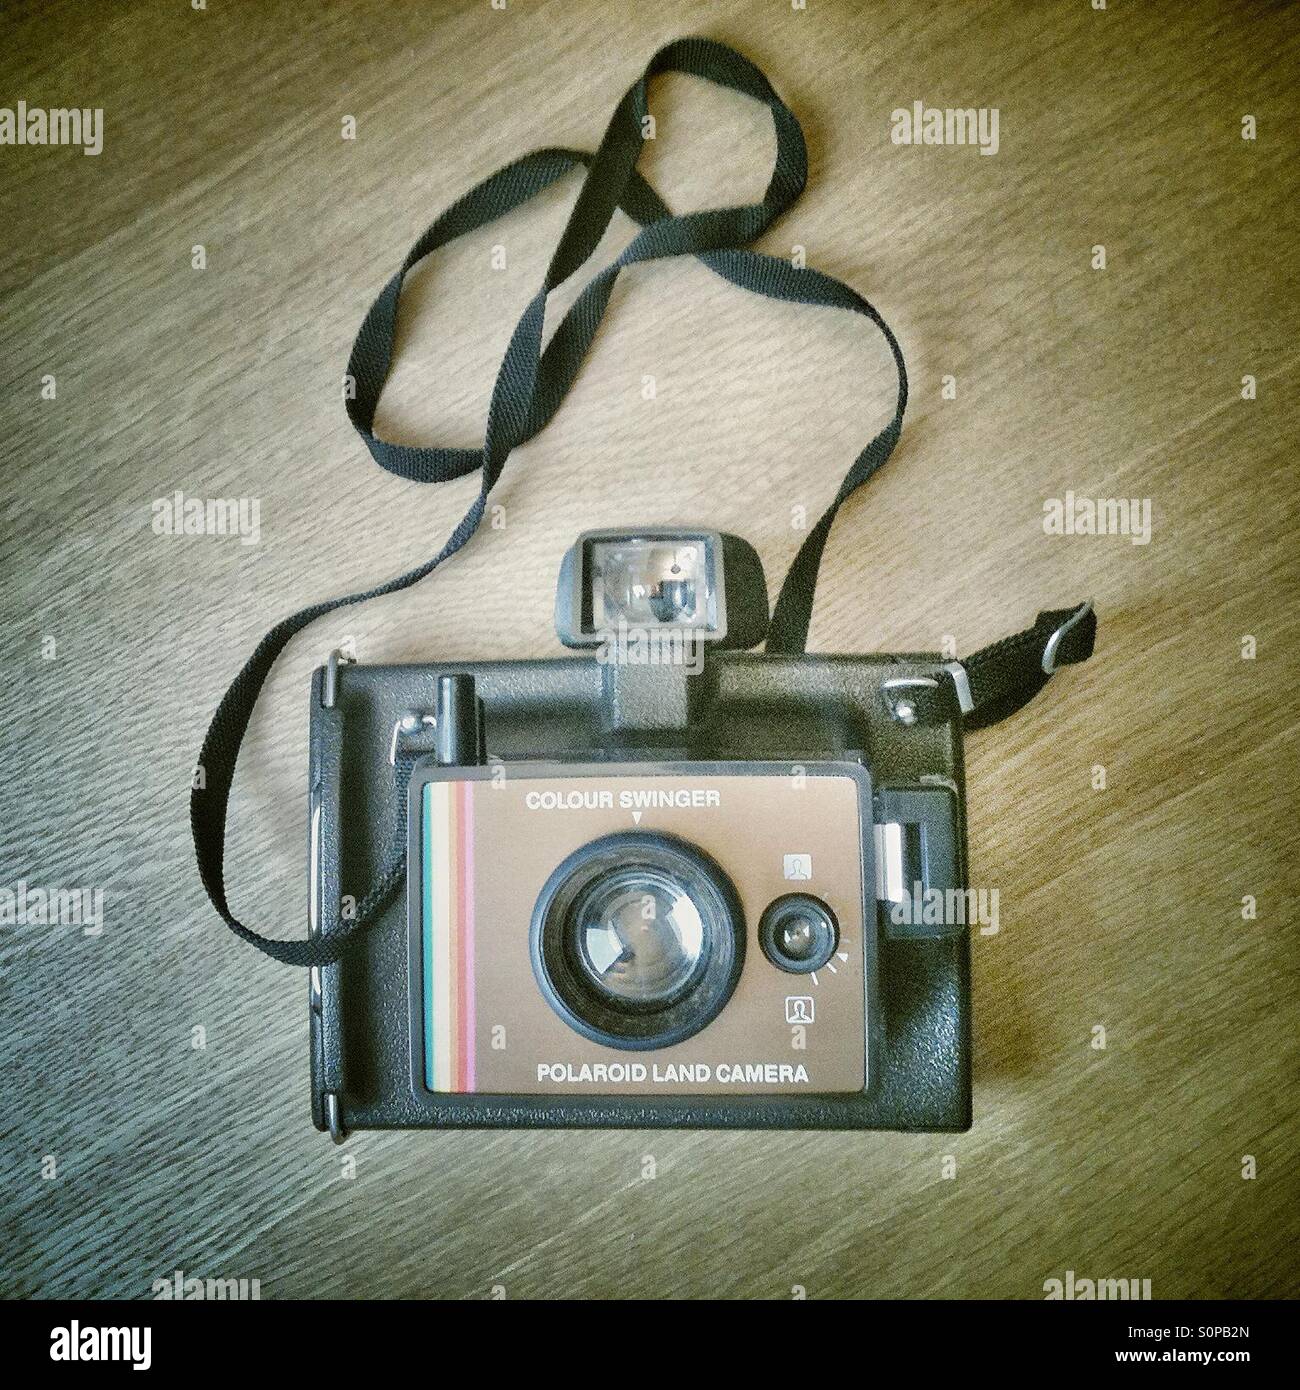 Polaroid camera hi-res stock photography and images photo